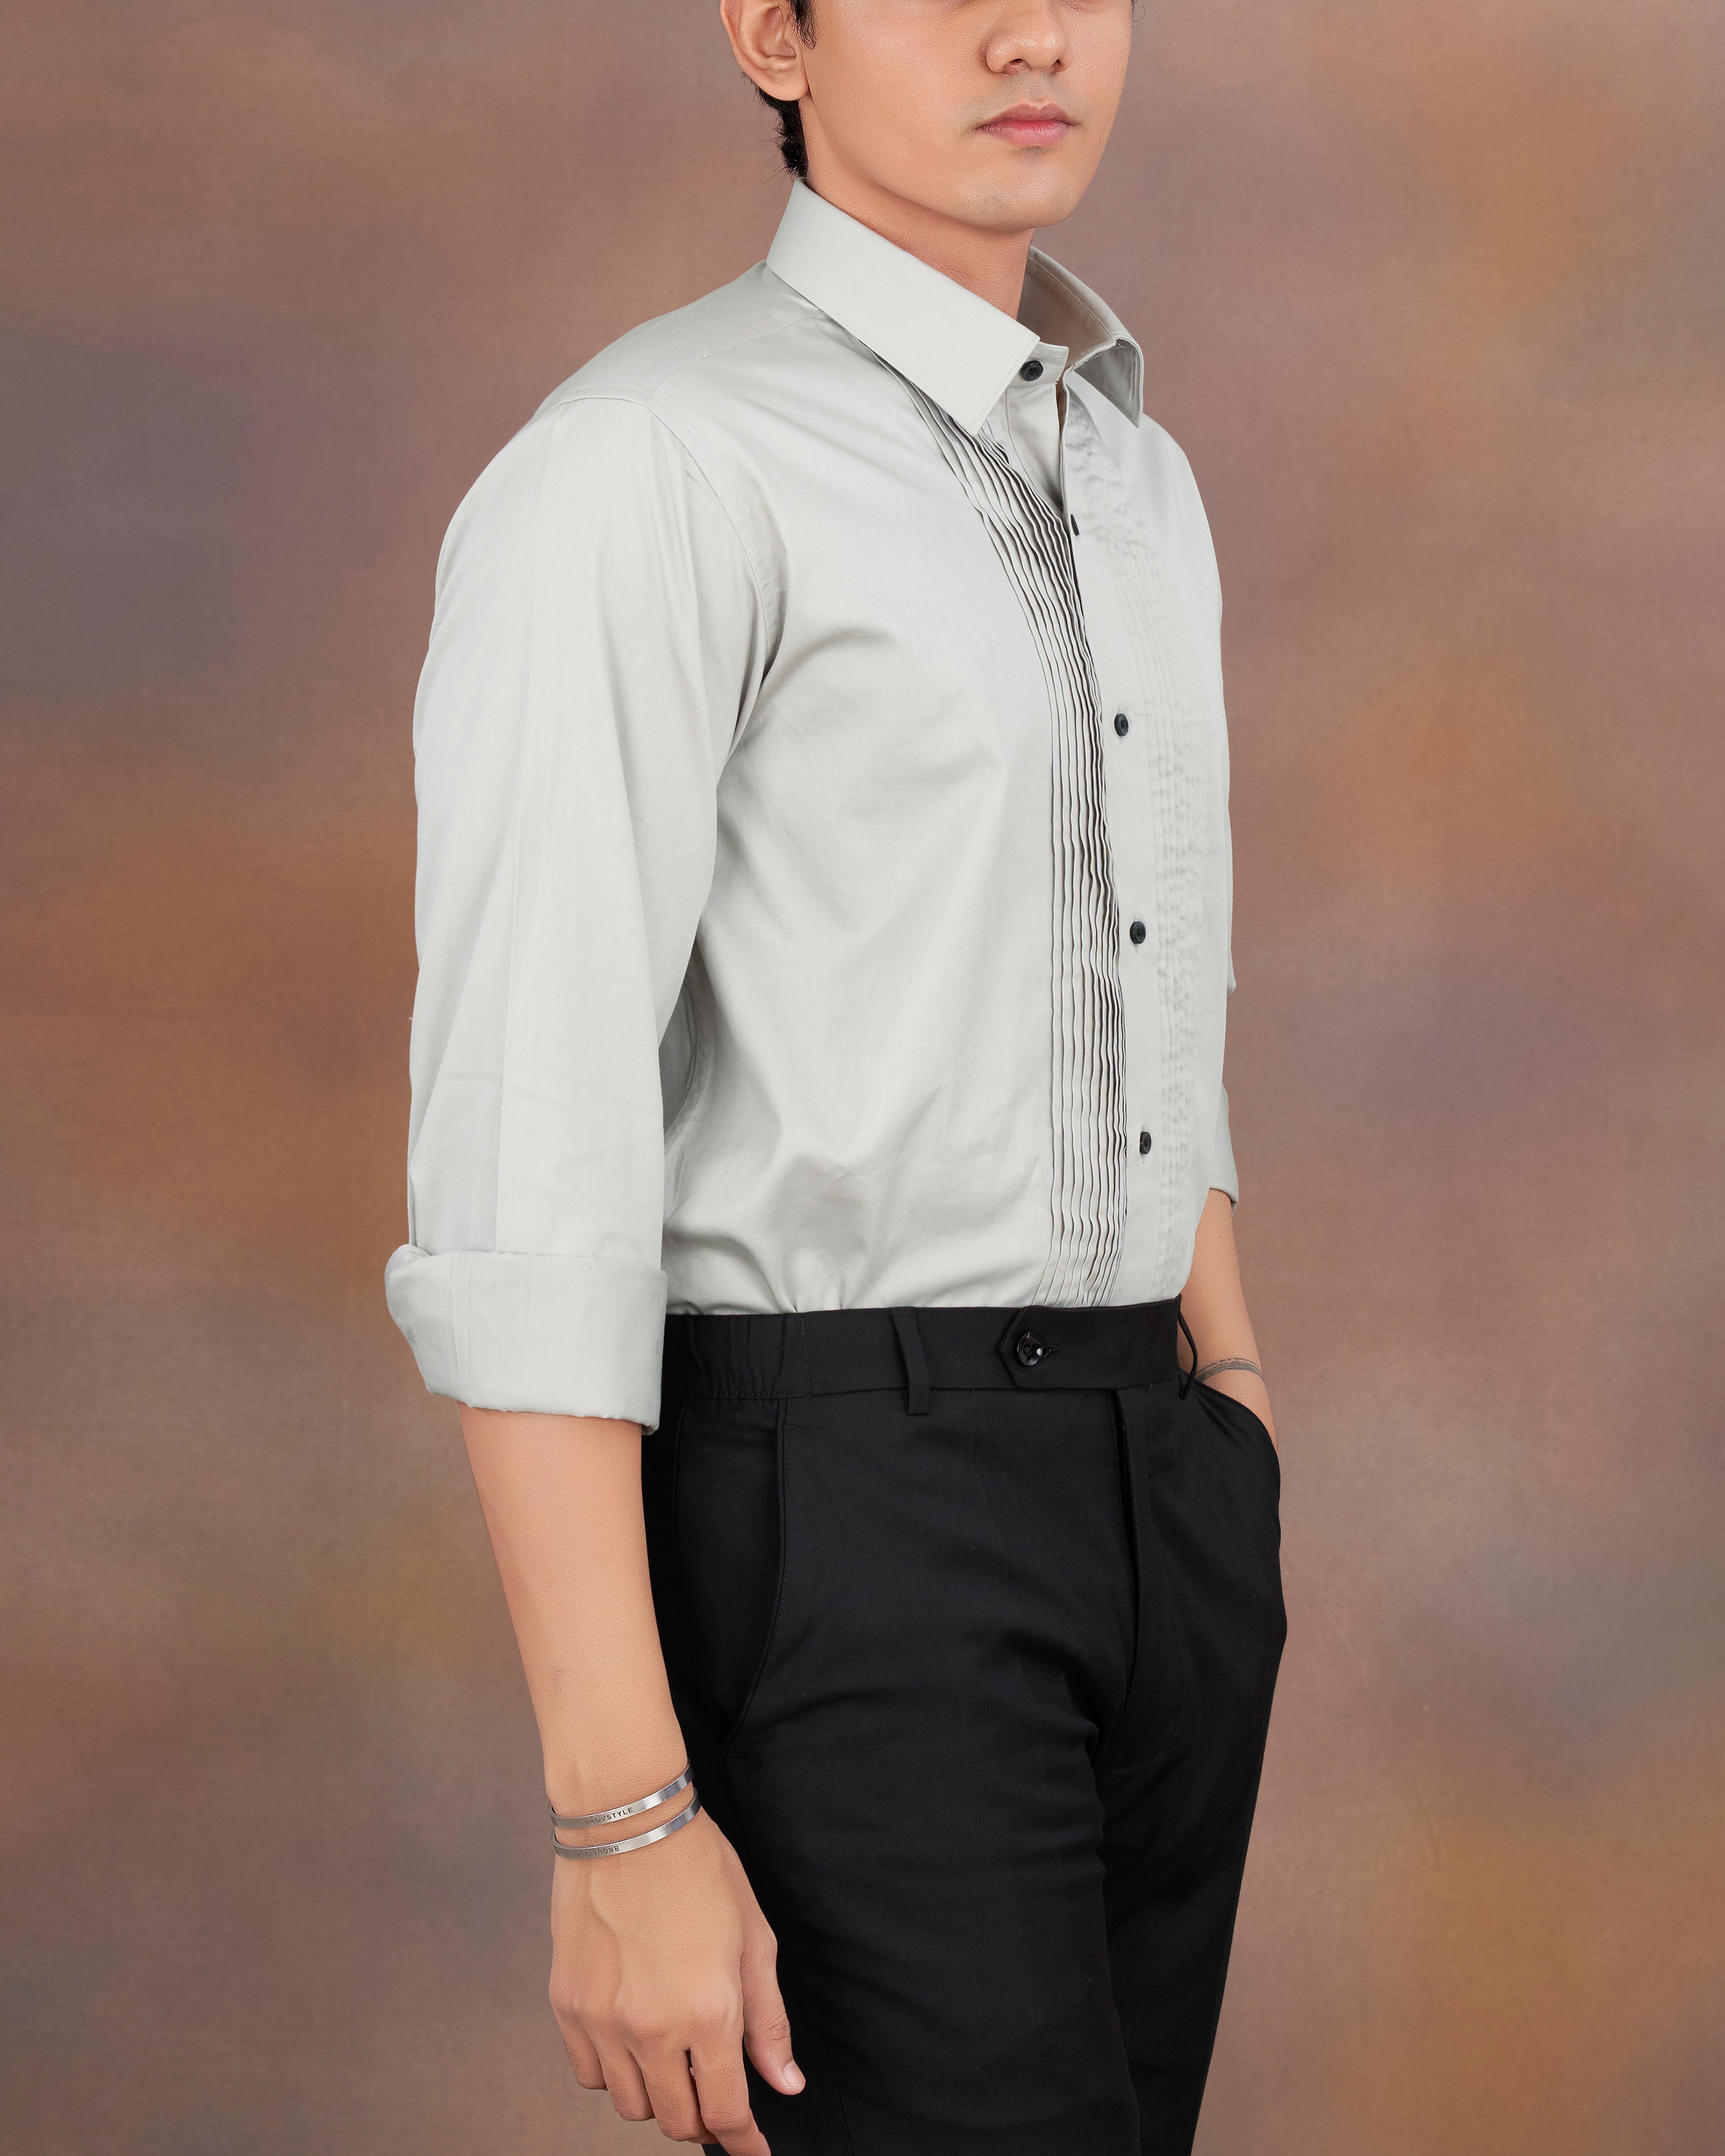 Celeste Grey Subtle Sheen Snake Pleated Super Soft Premium Cotton Tuxedo Shirt